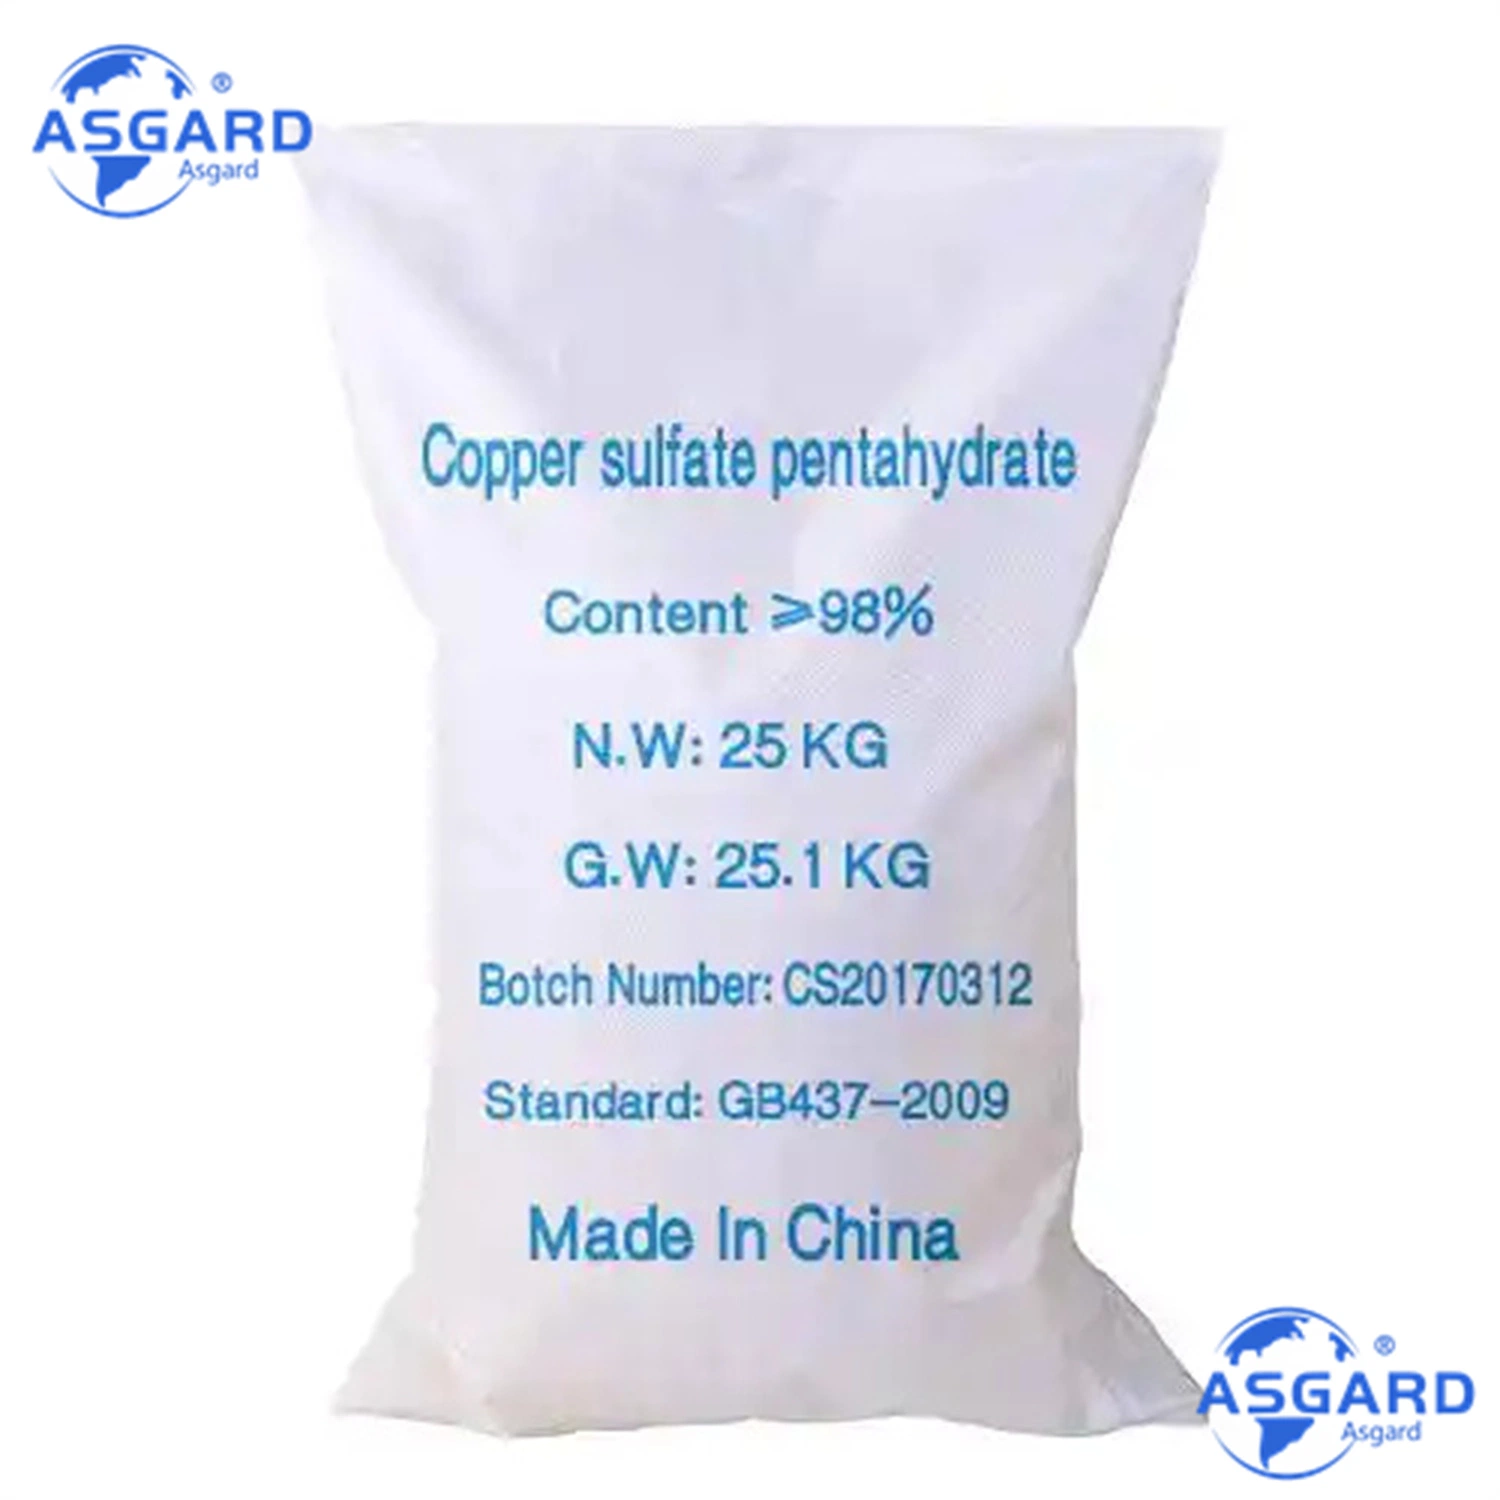 Sulfato de cobre sulfato de cobre sulfato Industrial uso CuSO4.5H2O fabricante